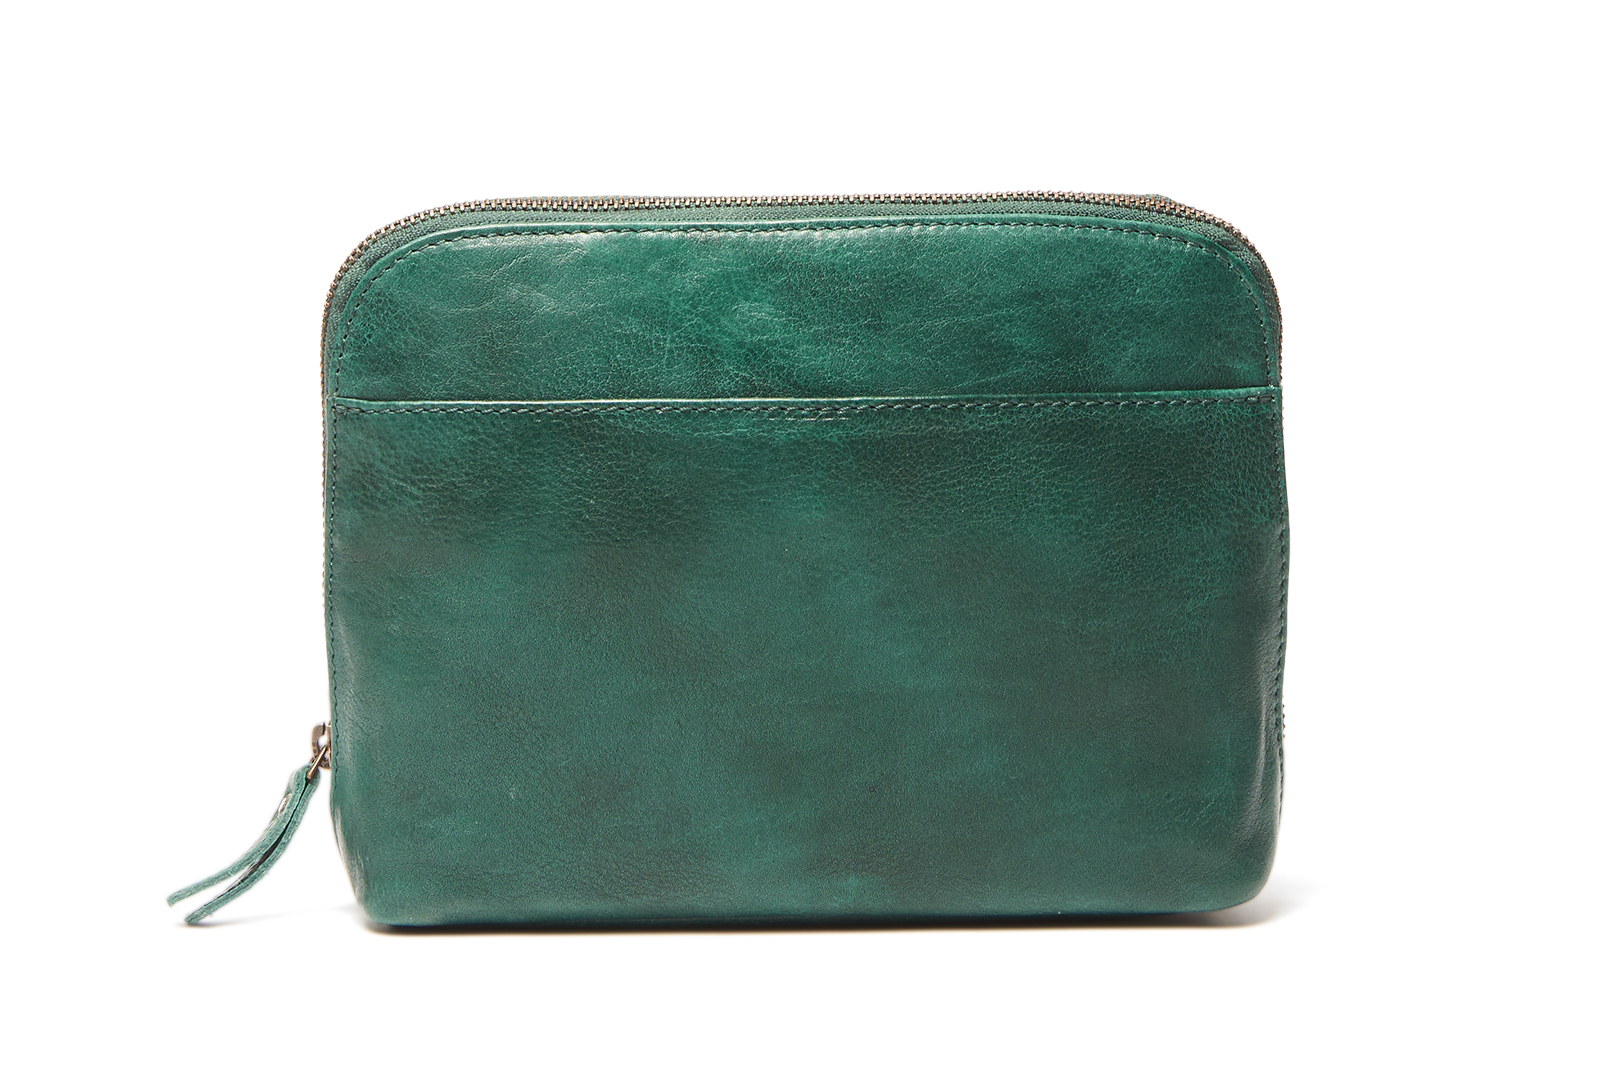 RH-476 Rachel - Pine Green - Oran Leather